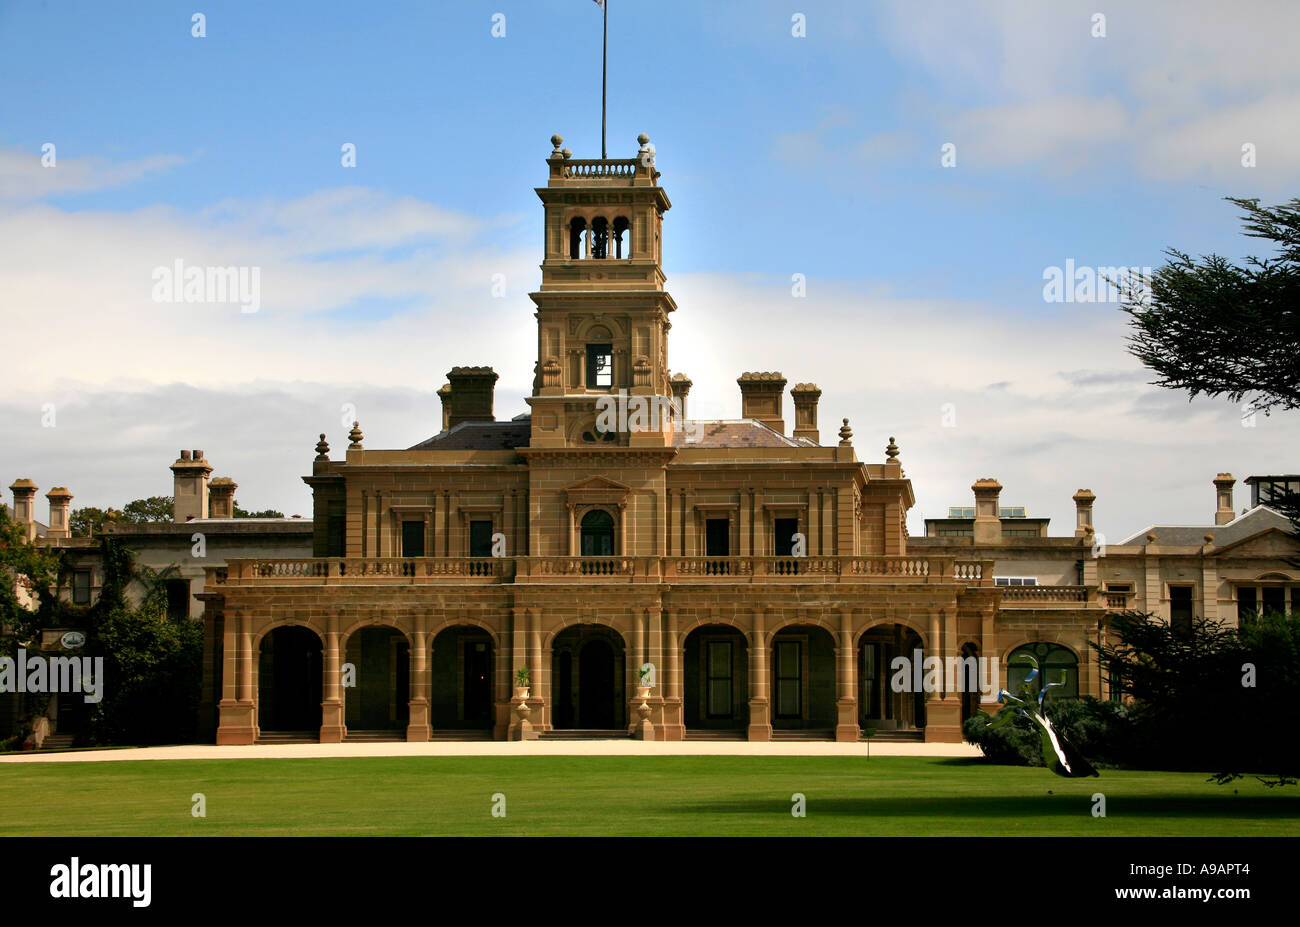 A classic Victorian era English Mansion build of sandstone at Werribee near Melbourne Australia Stock Photo